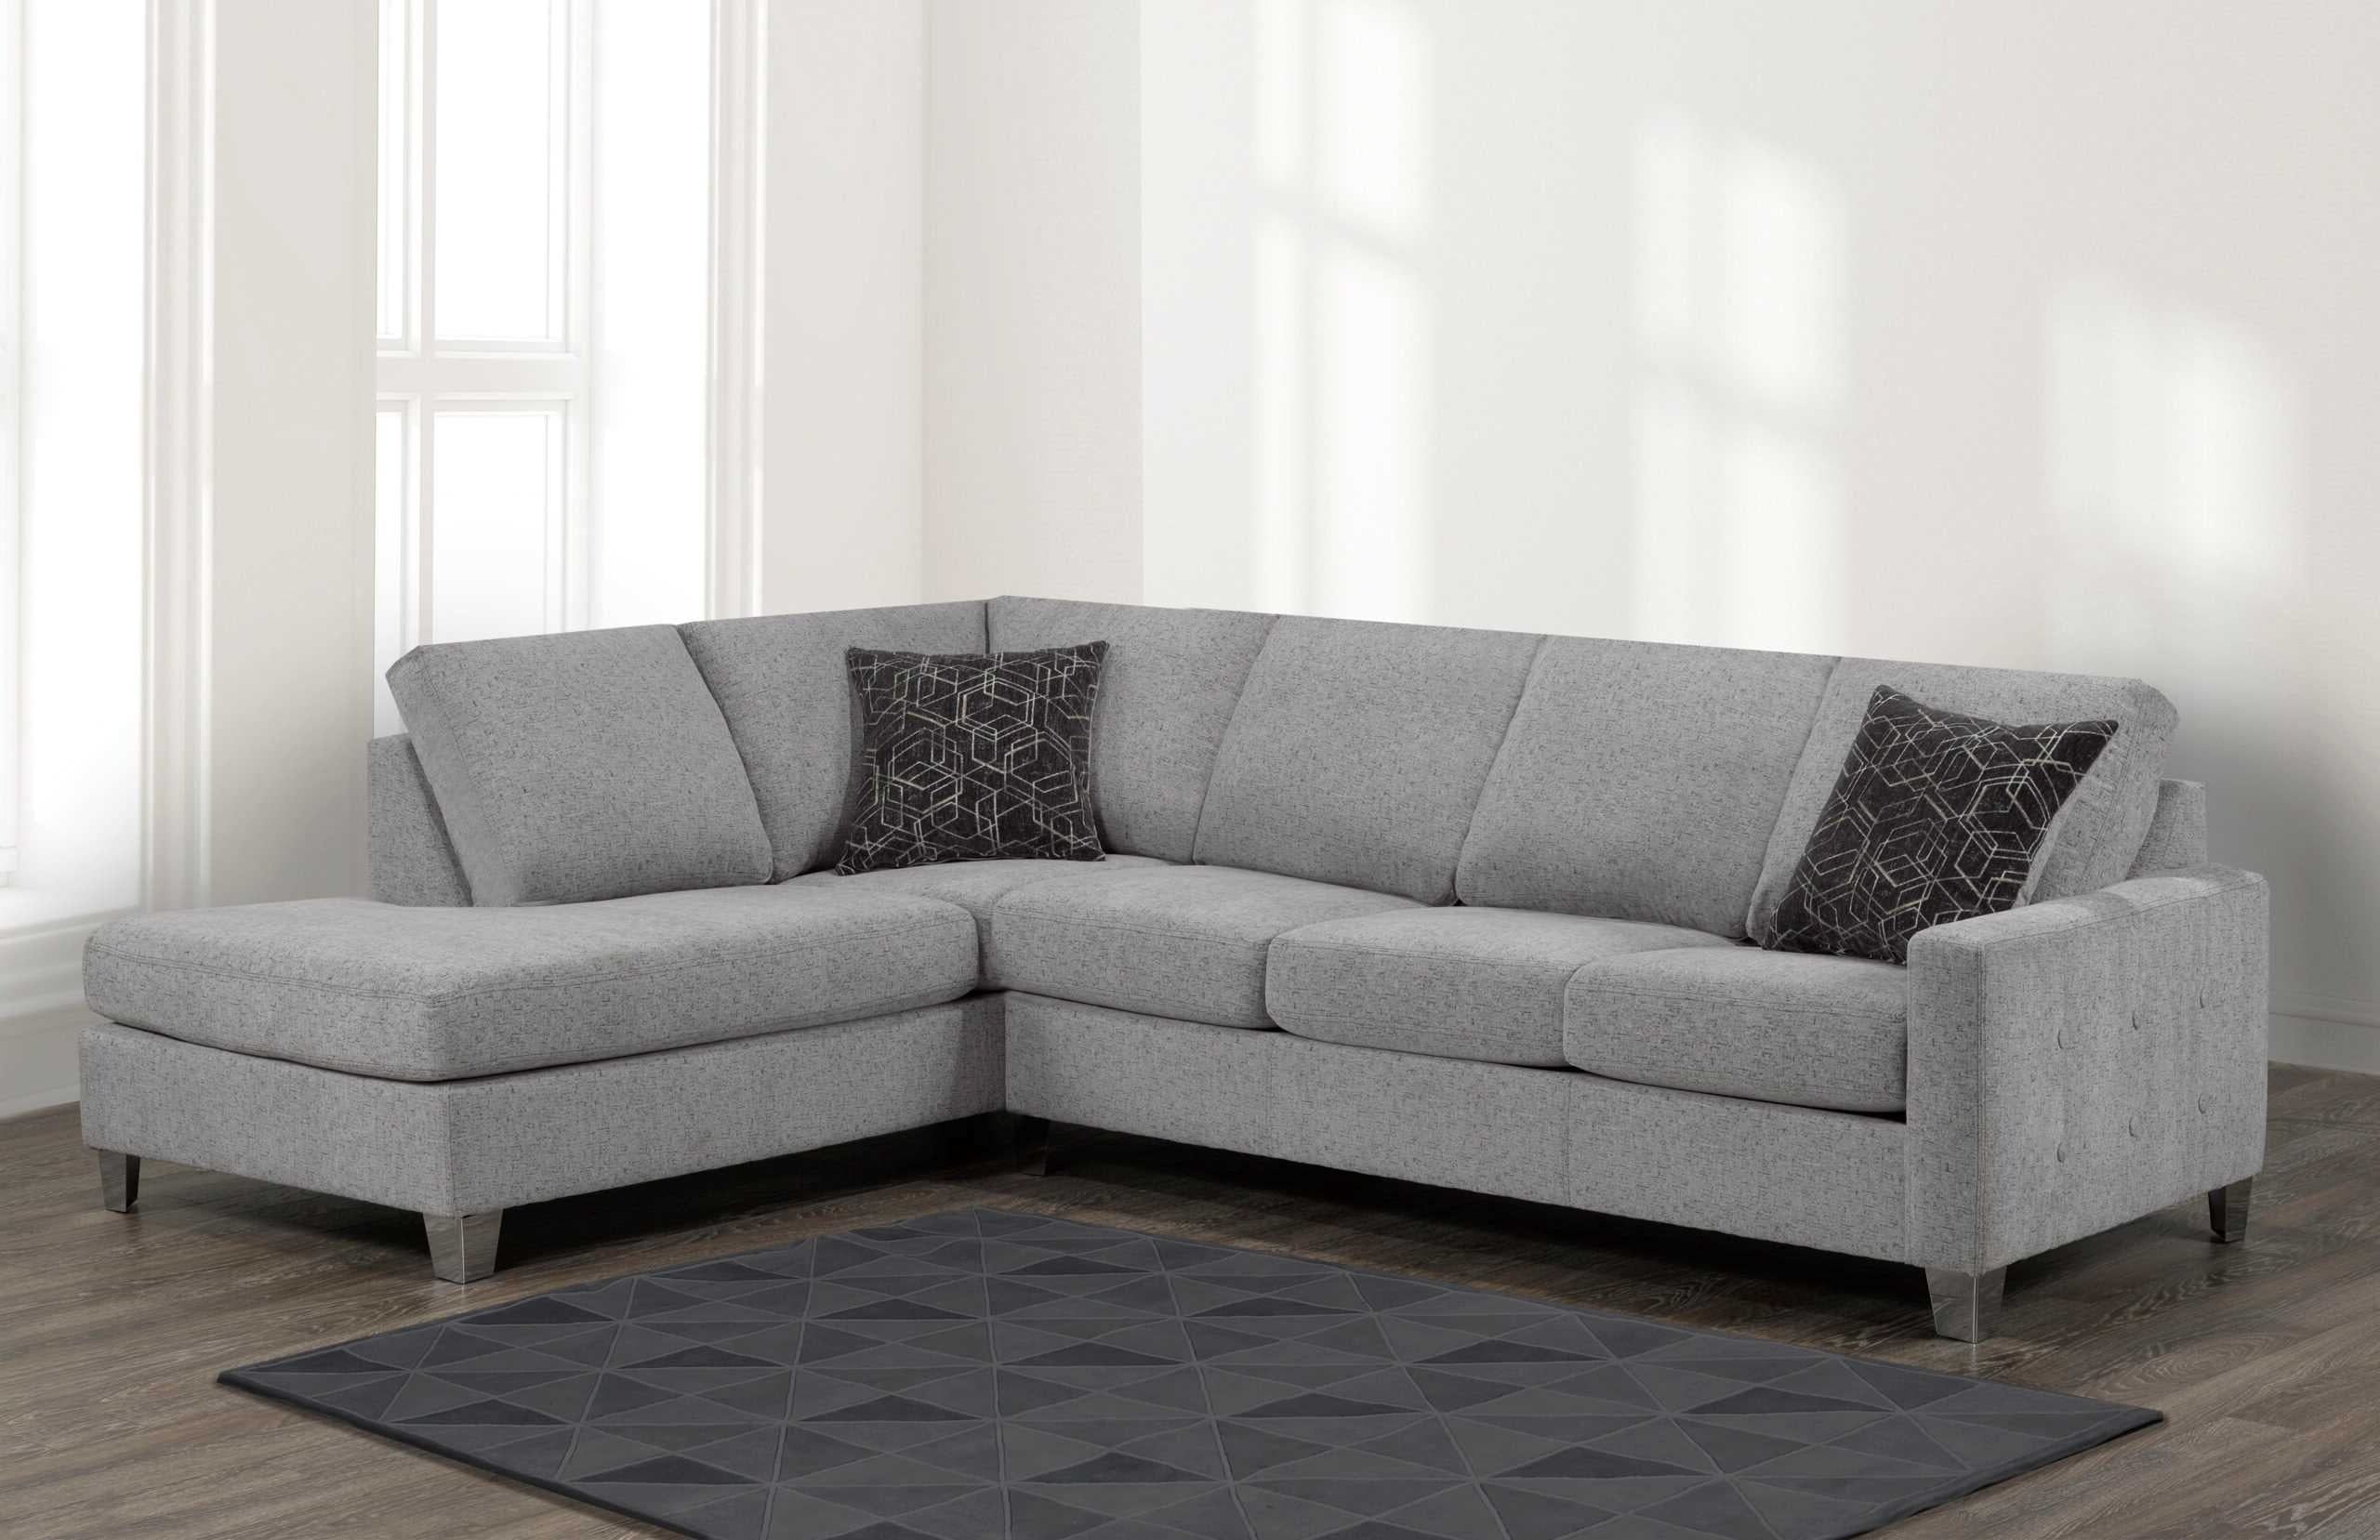 Francesca Ruba Silver Fabric Sectional Sofa 9851